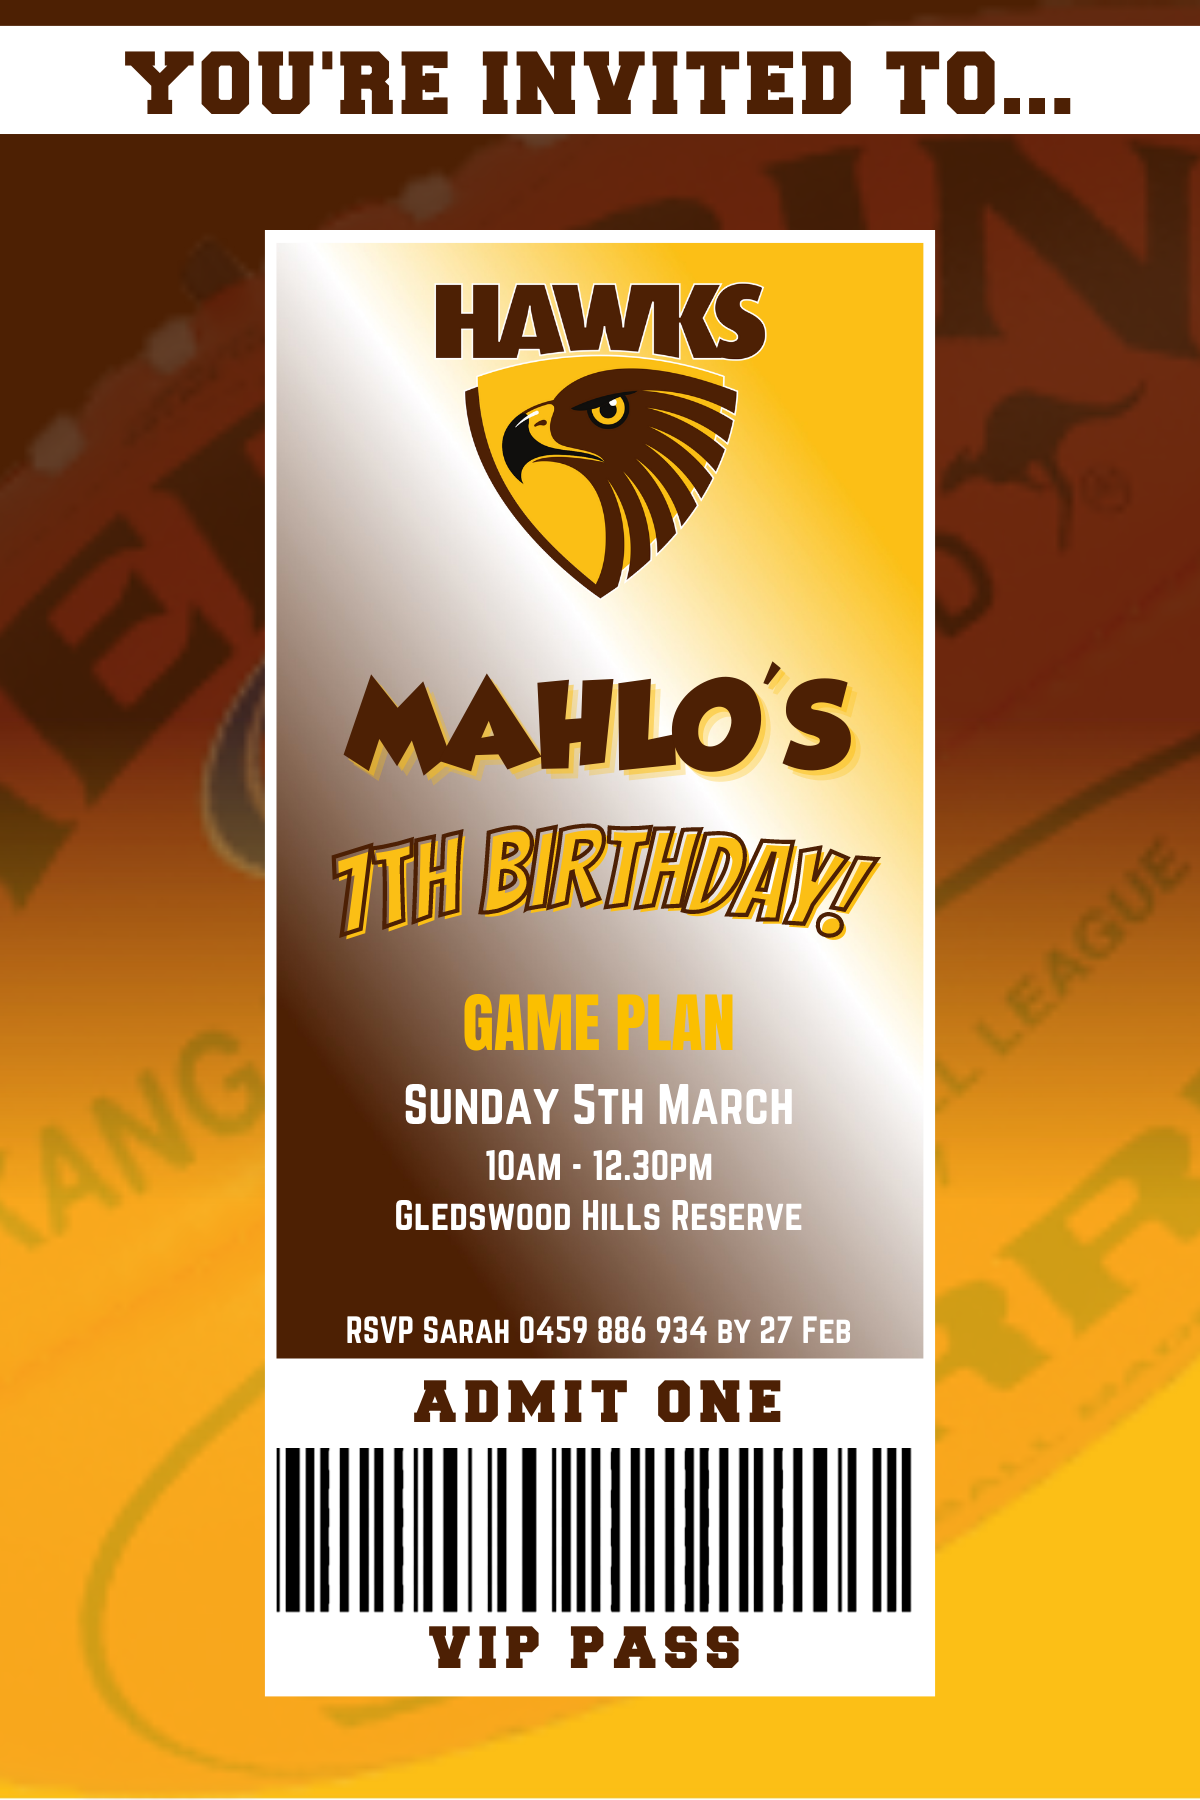 Hawthorn Hawks Birthday Invitation